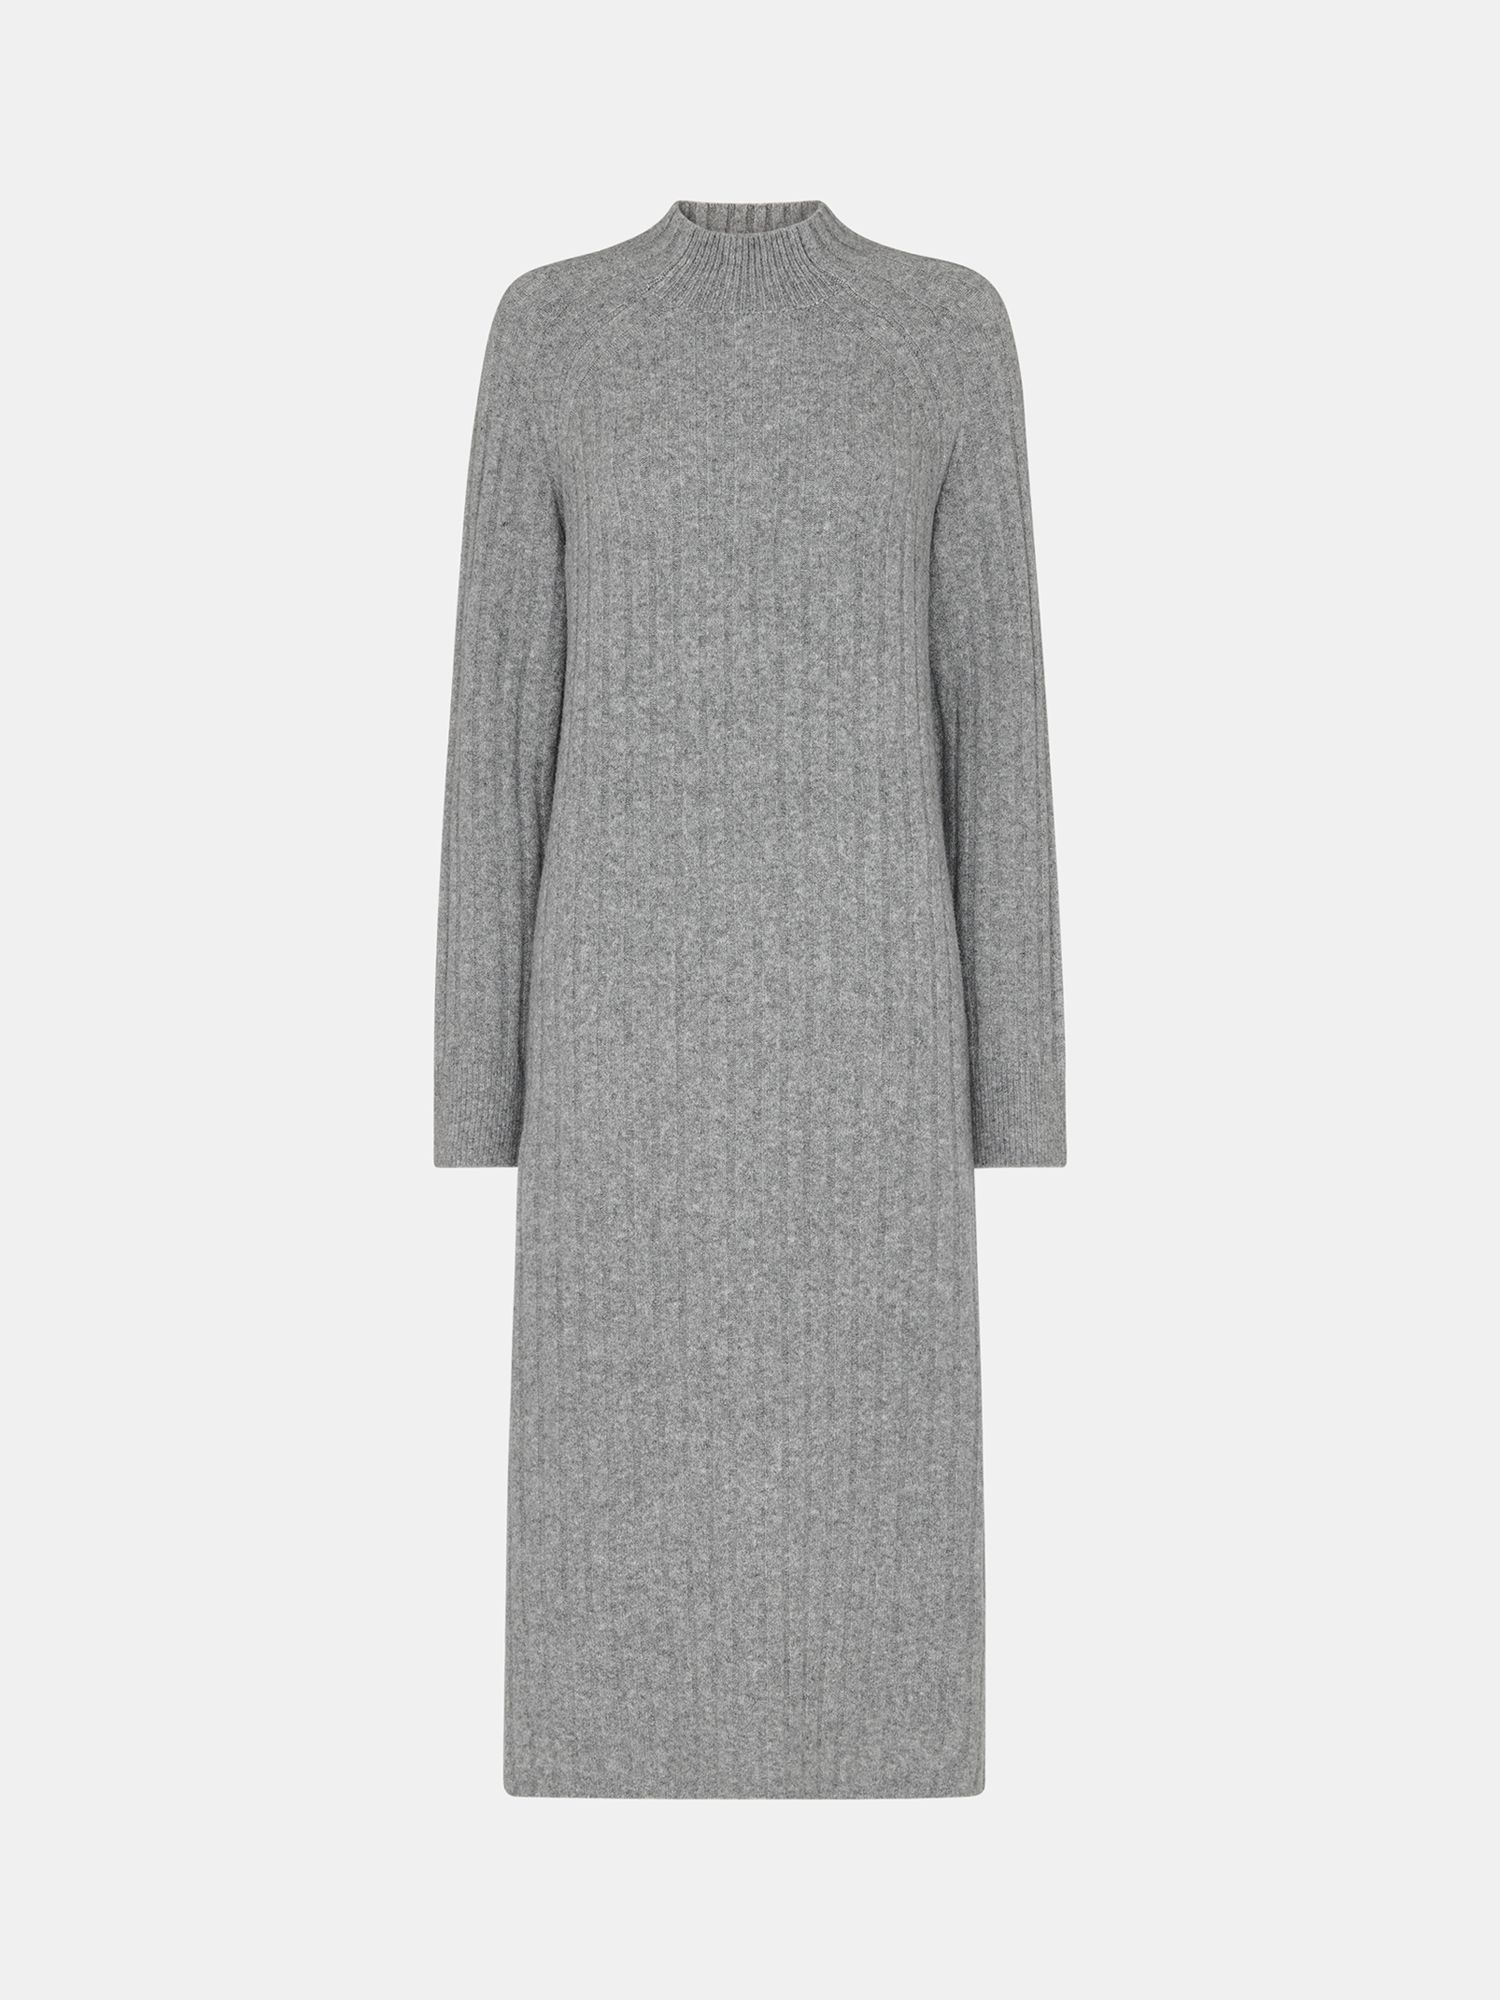 Whistles Ribbed Knitted Midi Dress, Grey at John Lewis & Partners